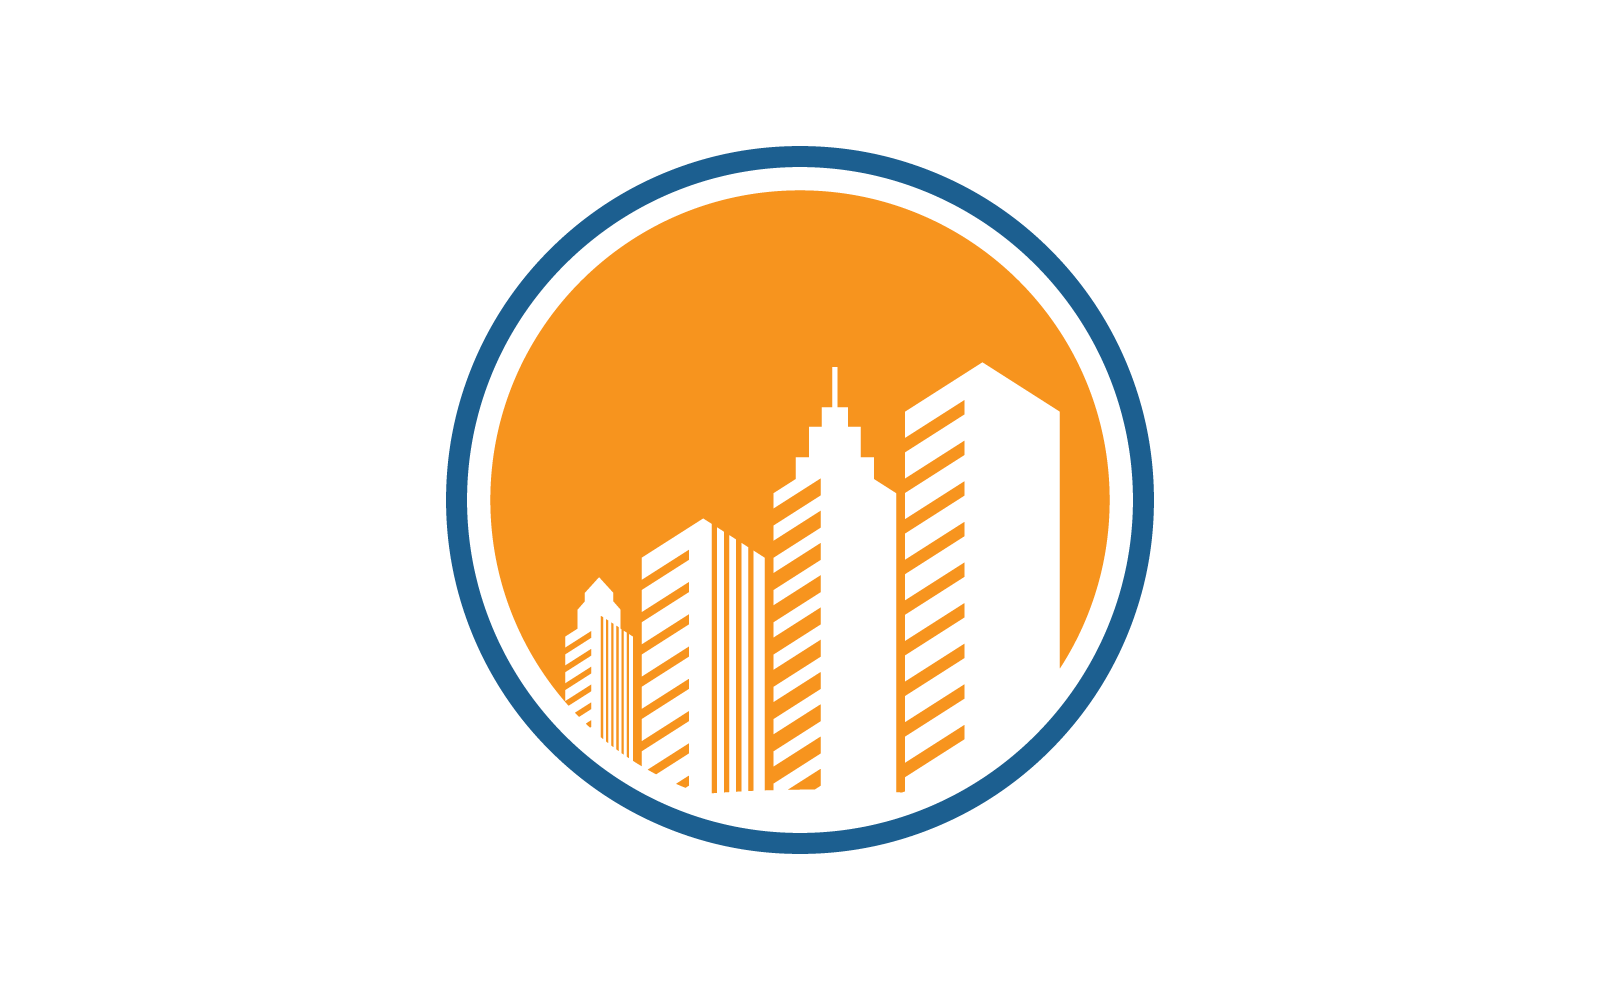 City skyline, city silhouette logo vector illustration